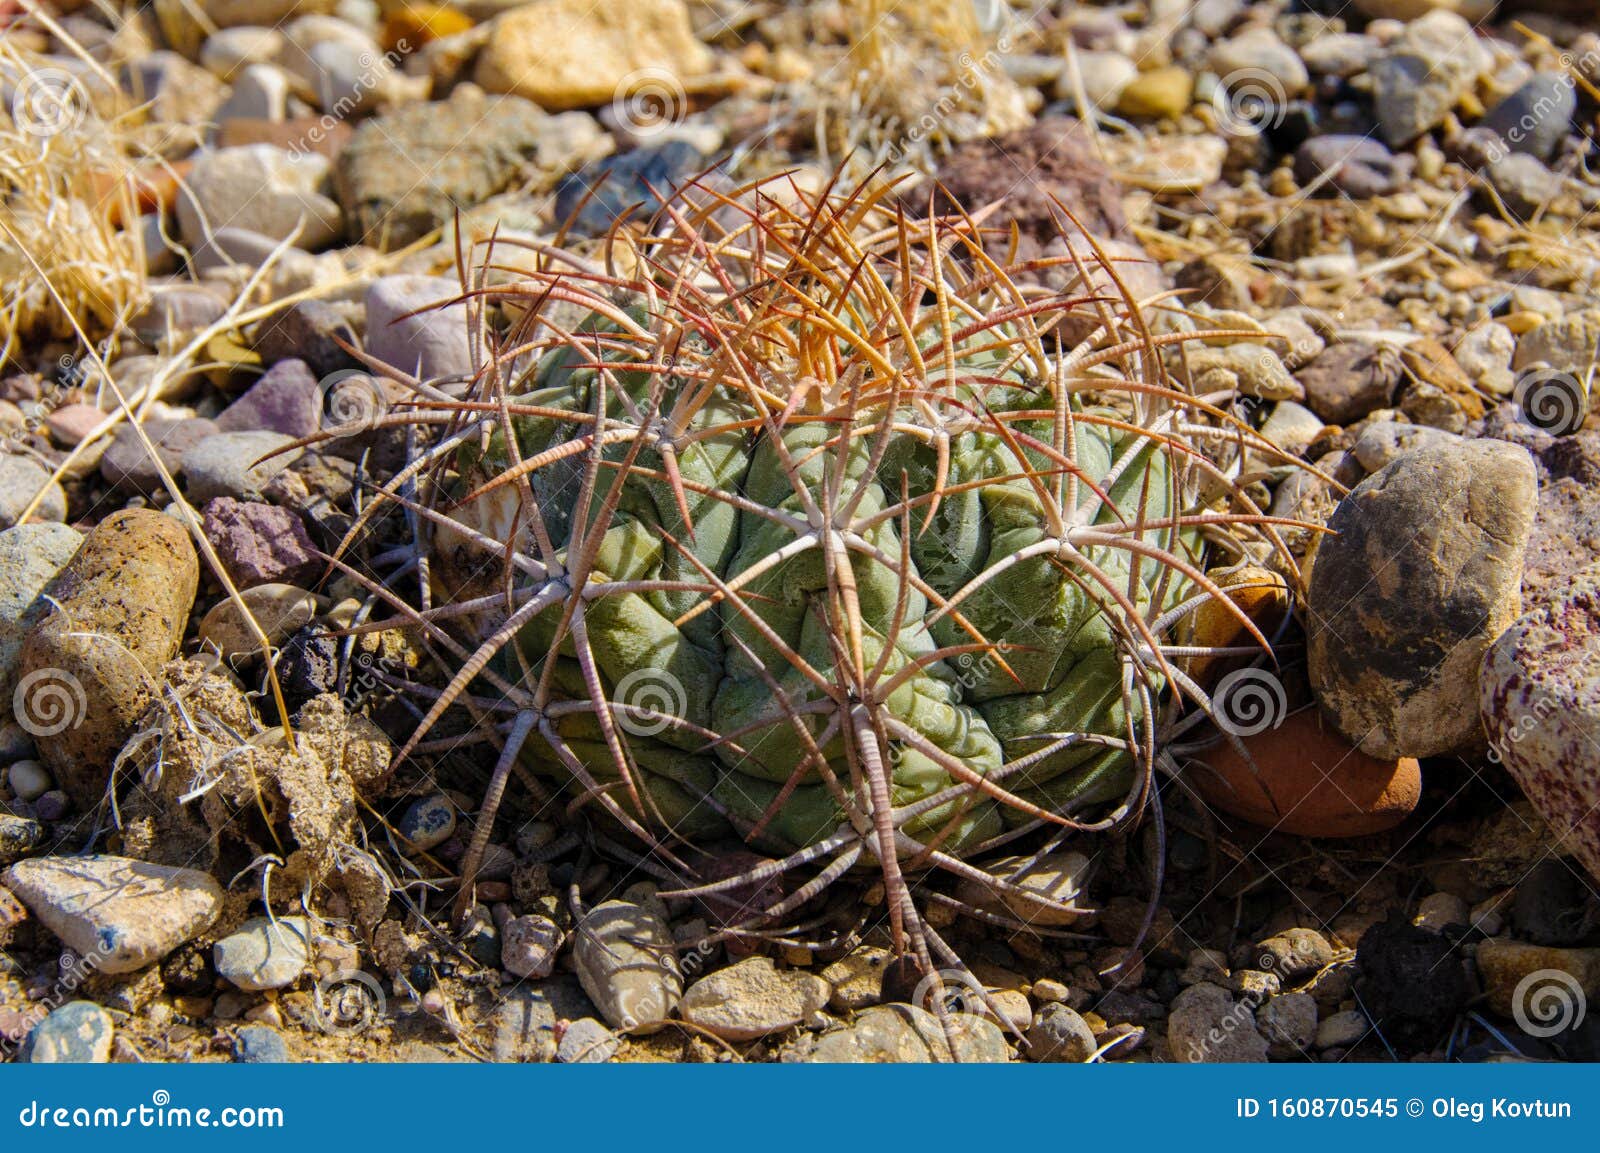 echinocactus horizonthalonius  in the texas desert in big bend national park